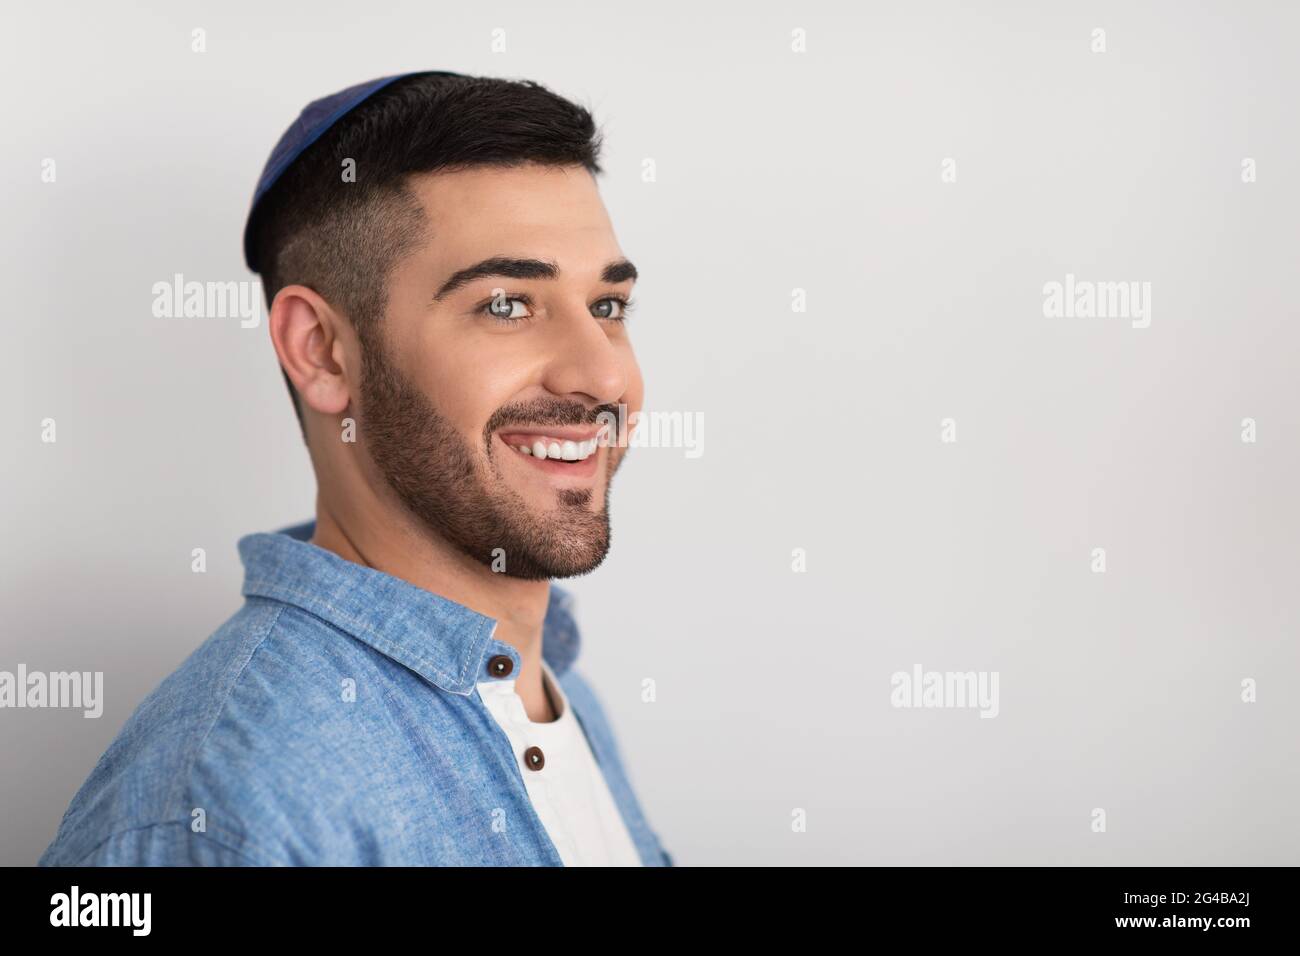 Closeup portrait of smiling jewish man in kippa Stock Photo